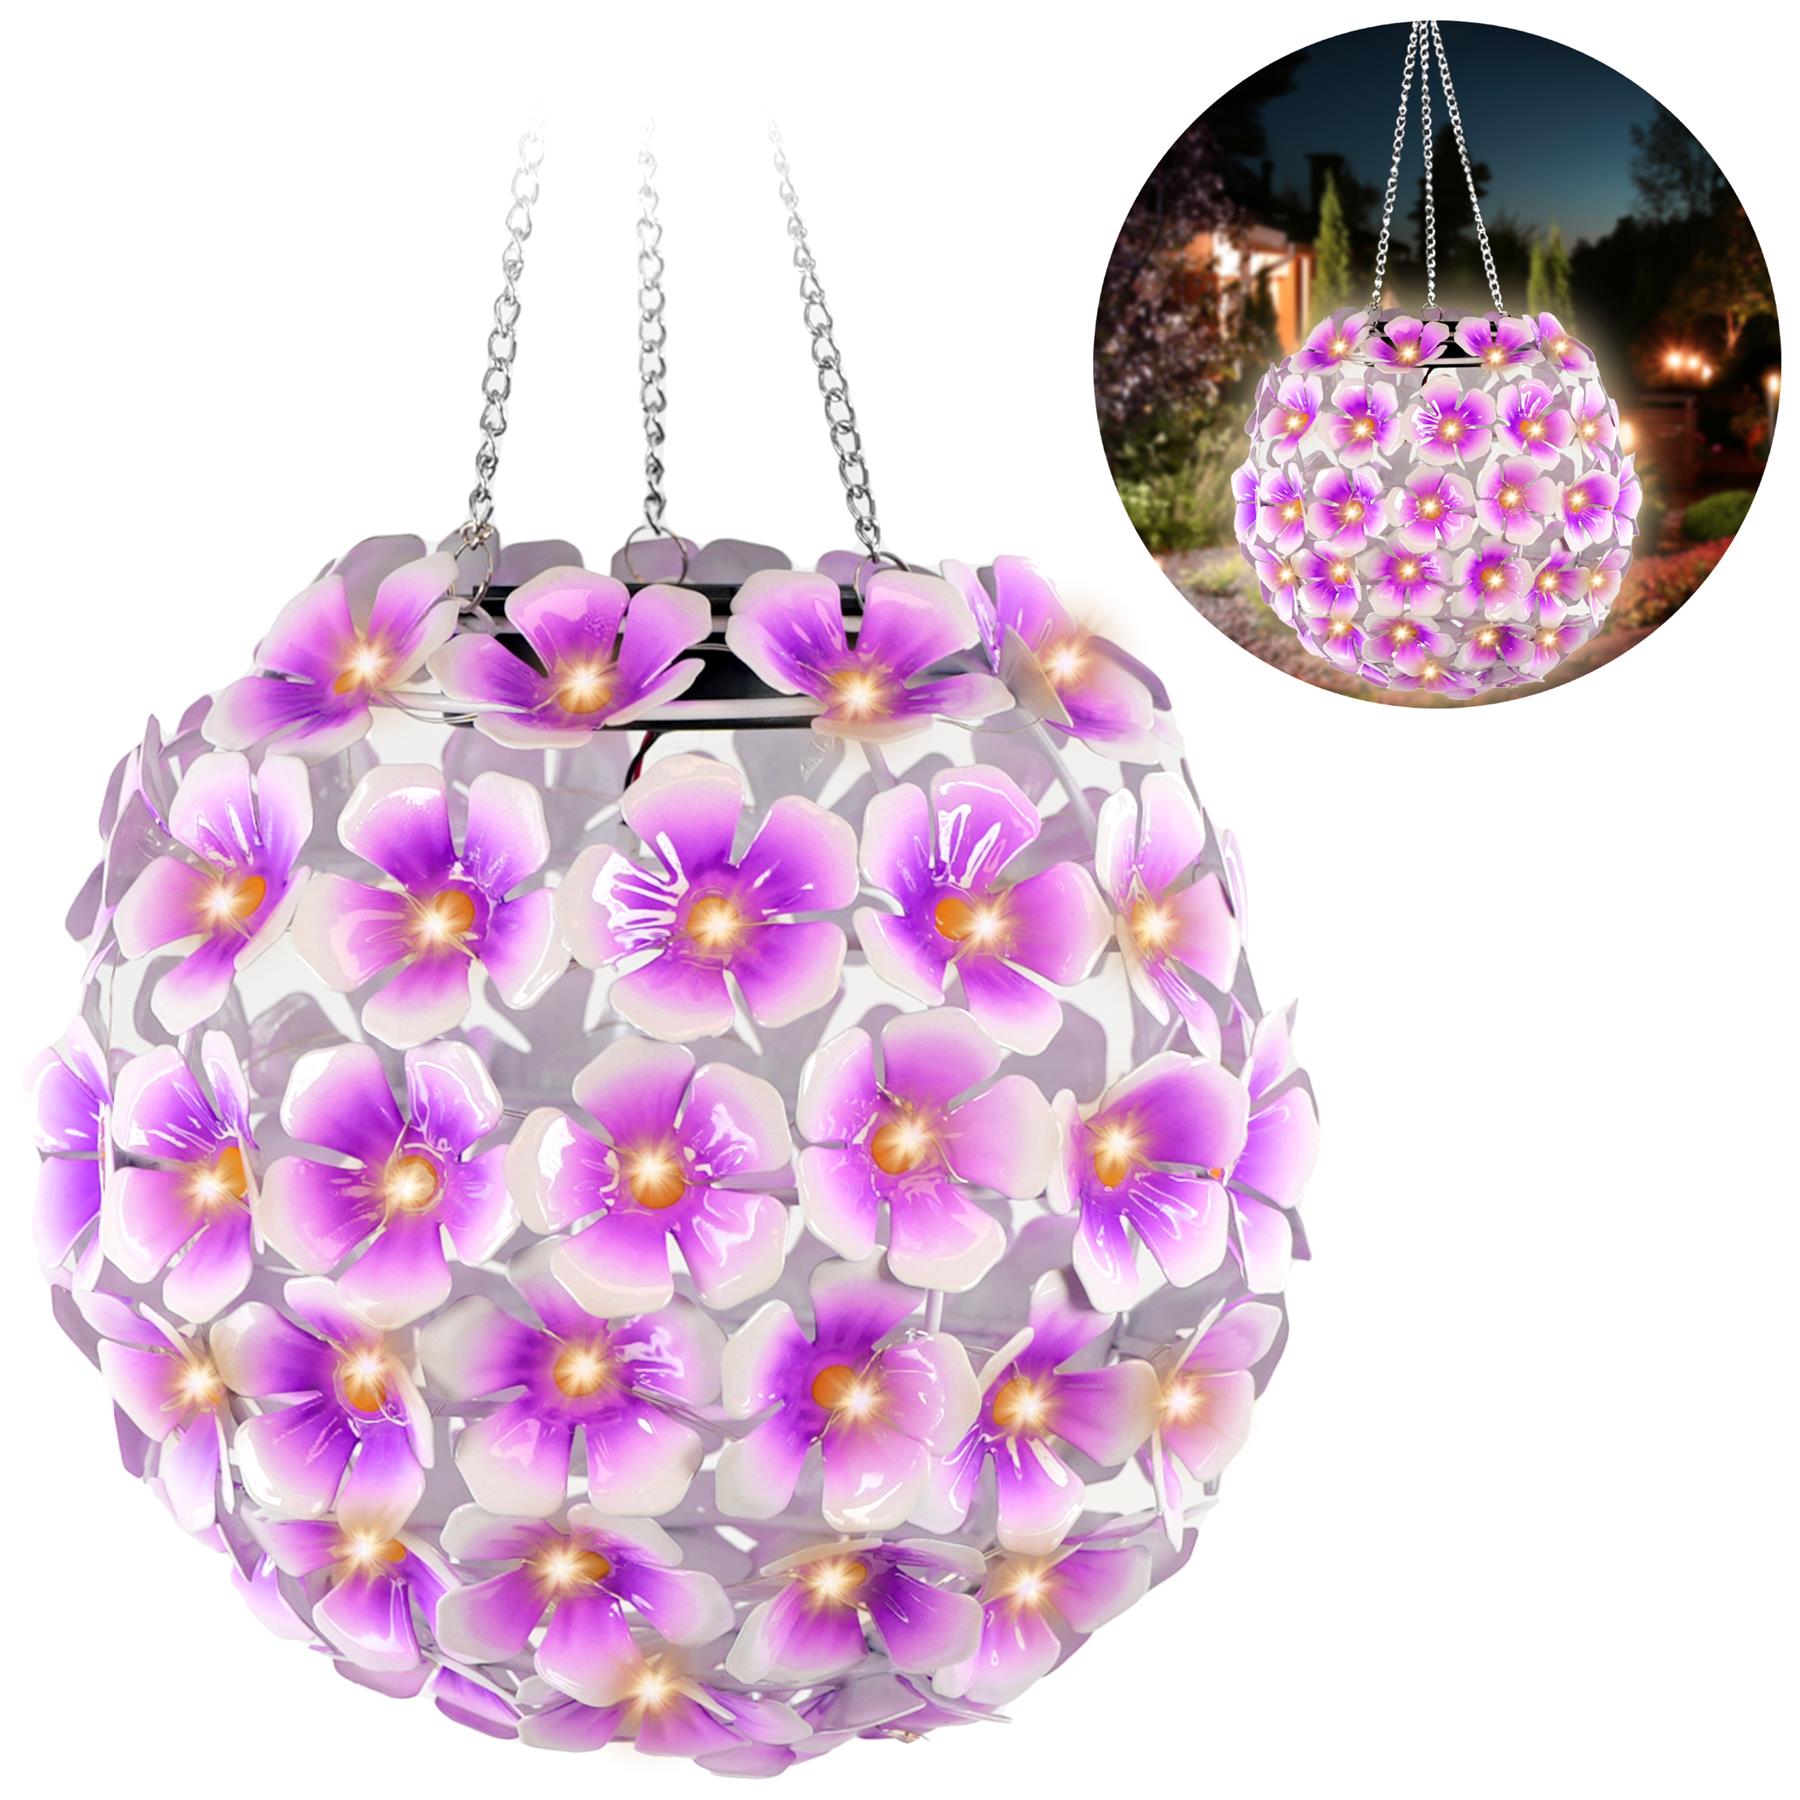 GEEZY Solar Hanging Flower Ball Light